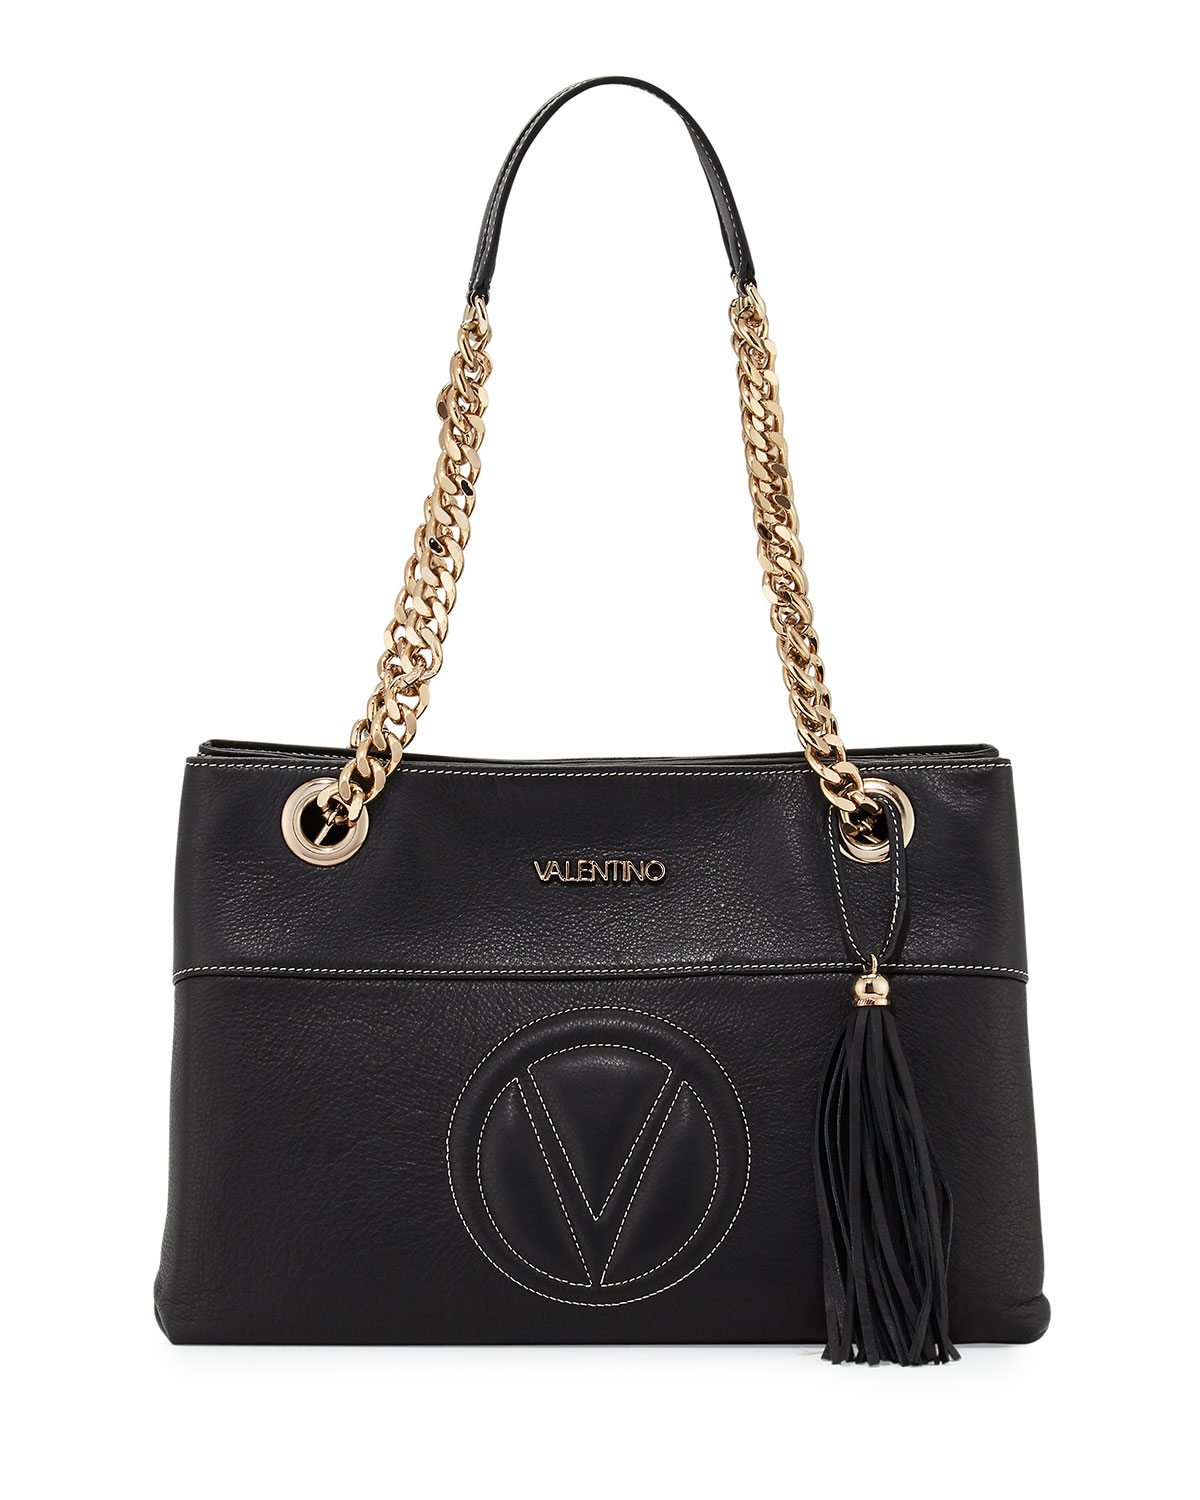 Valentino by mario valentino Karina Leather Shoulder Bag in Black | Lyst